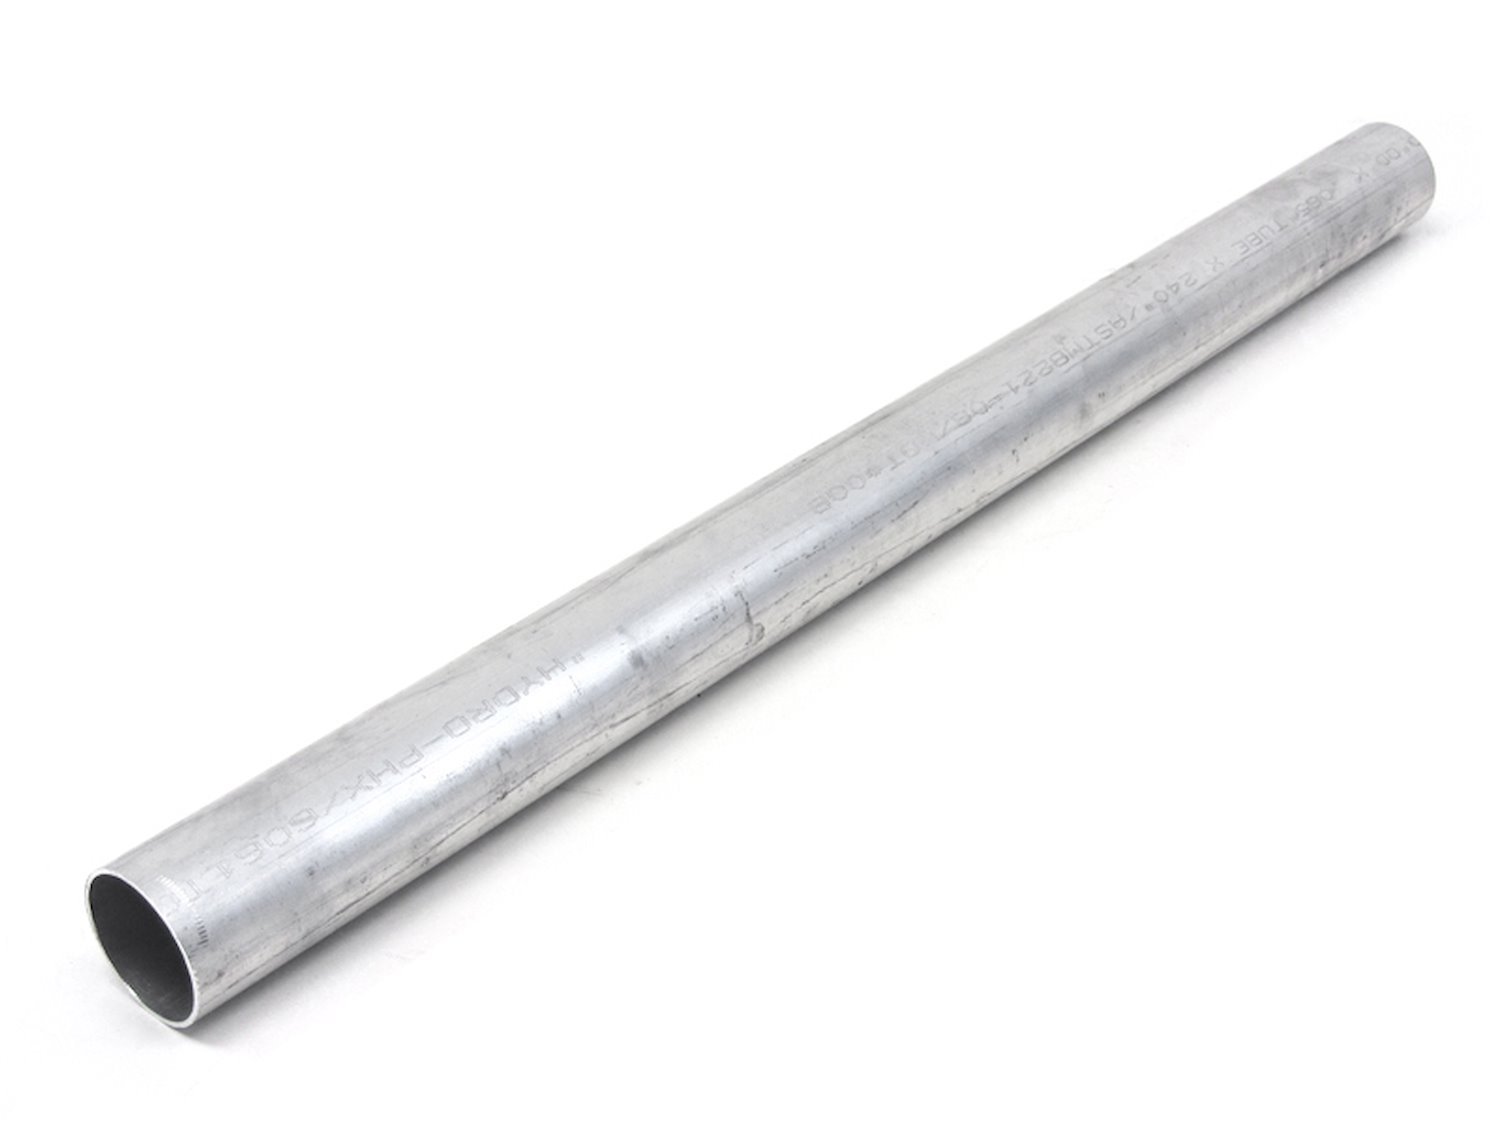 AST-3F-325 Aluminum Tubing, 6061 Aluminum, Straight Tubing, 3-1/4 in. OD, Seamless, Raw Finish, 3 ft. Long